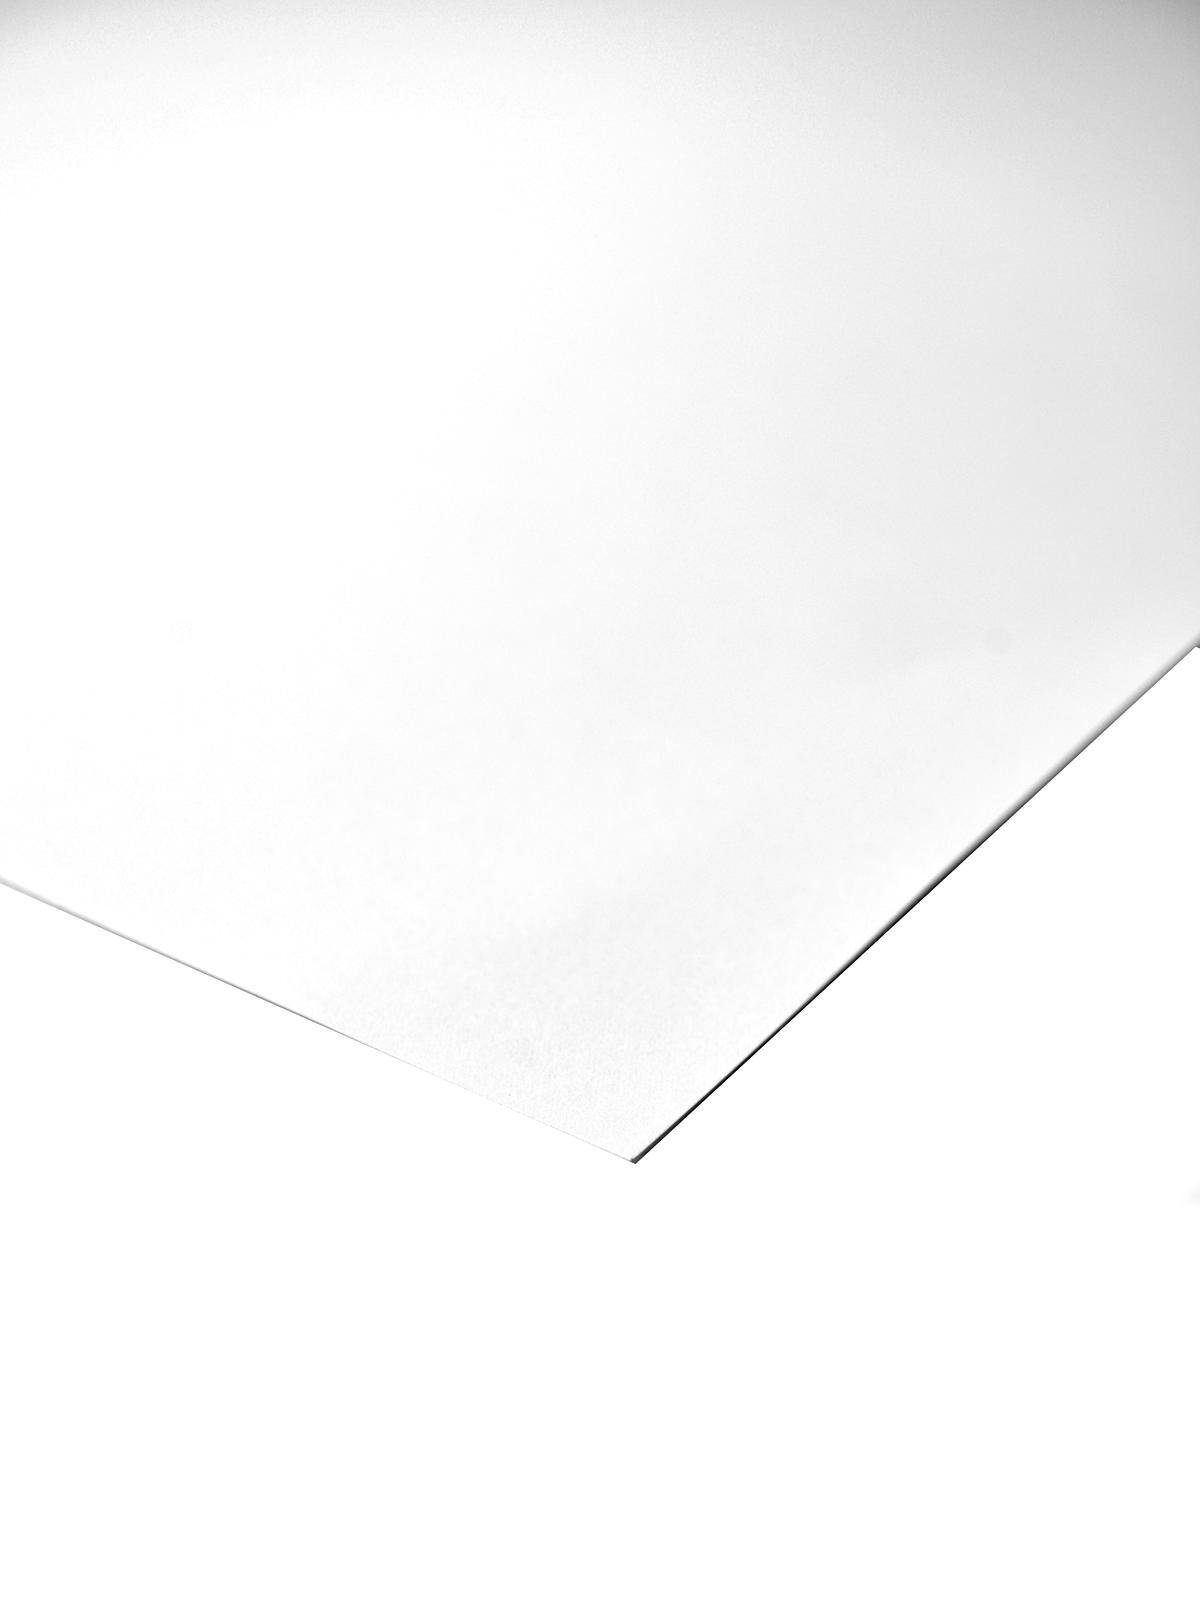 Strathmore® 400 Series Bristol Smooth Paper Pad